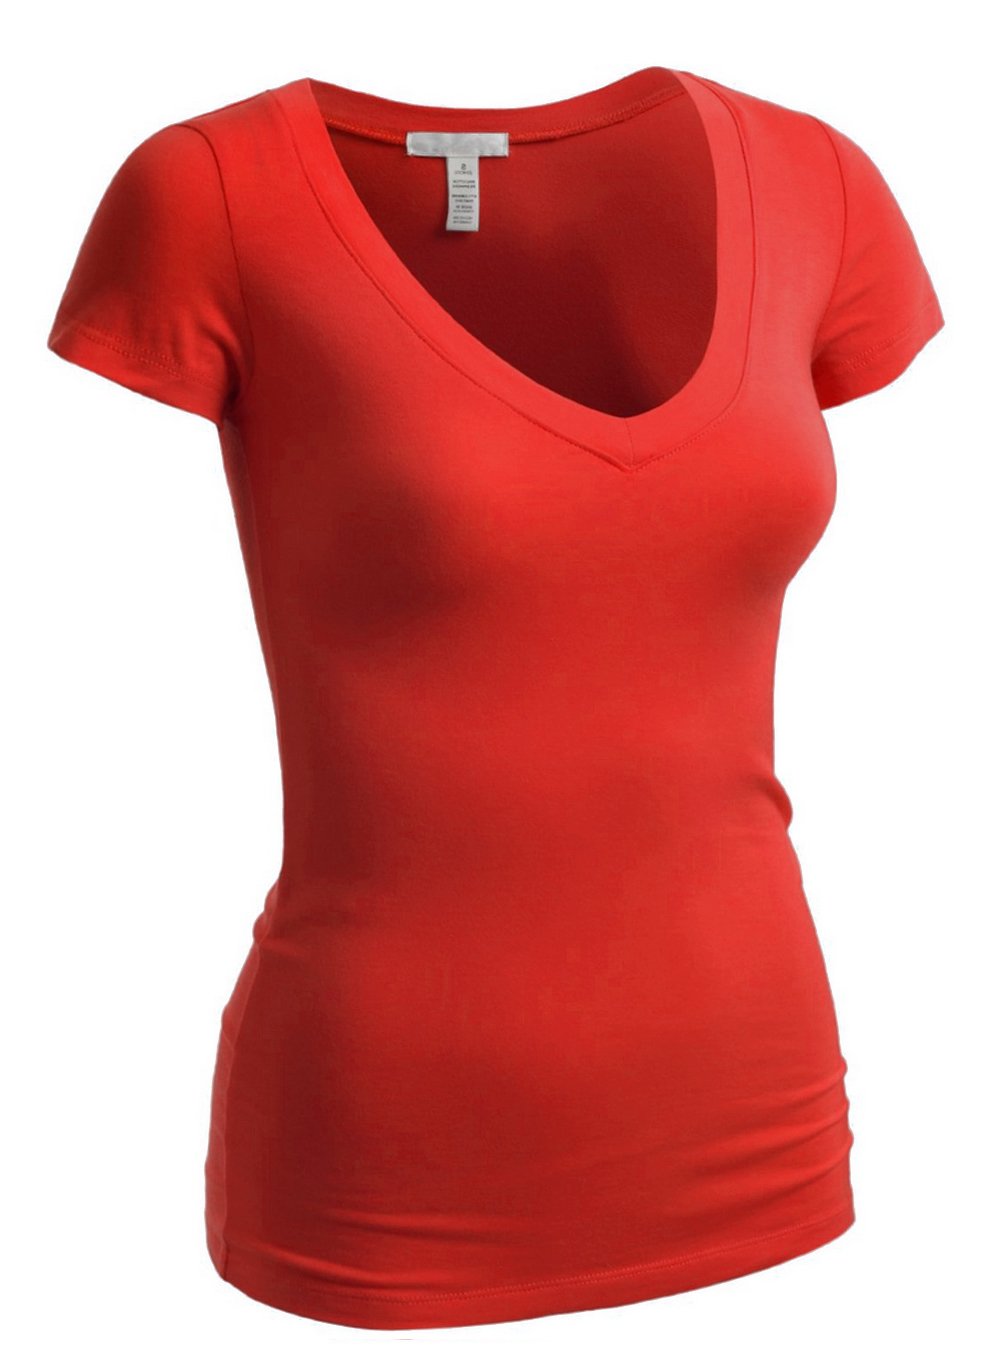 Short Sleeve V-neck Tee Tank Top Shirt Cotton (Medium, Red)